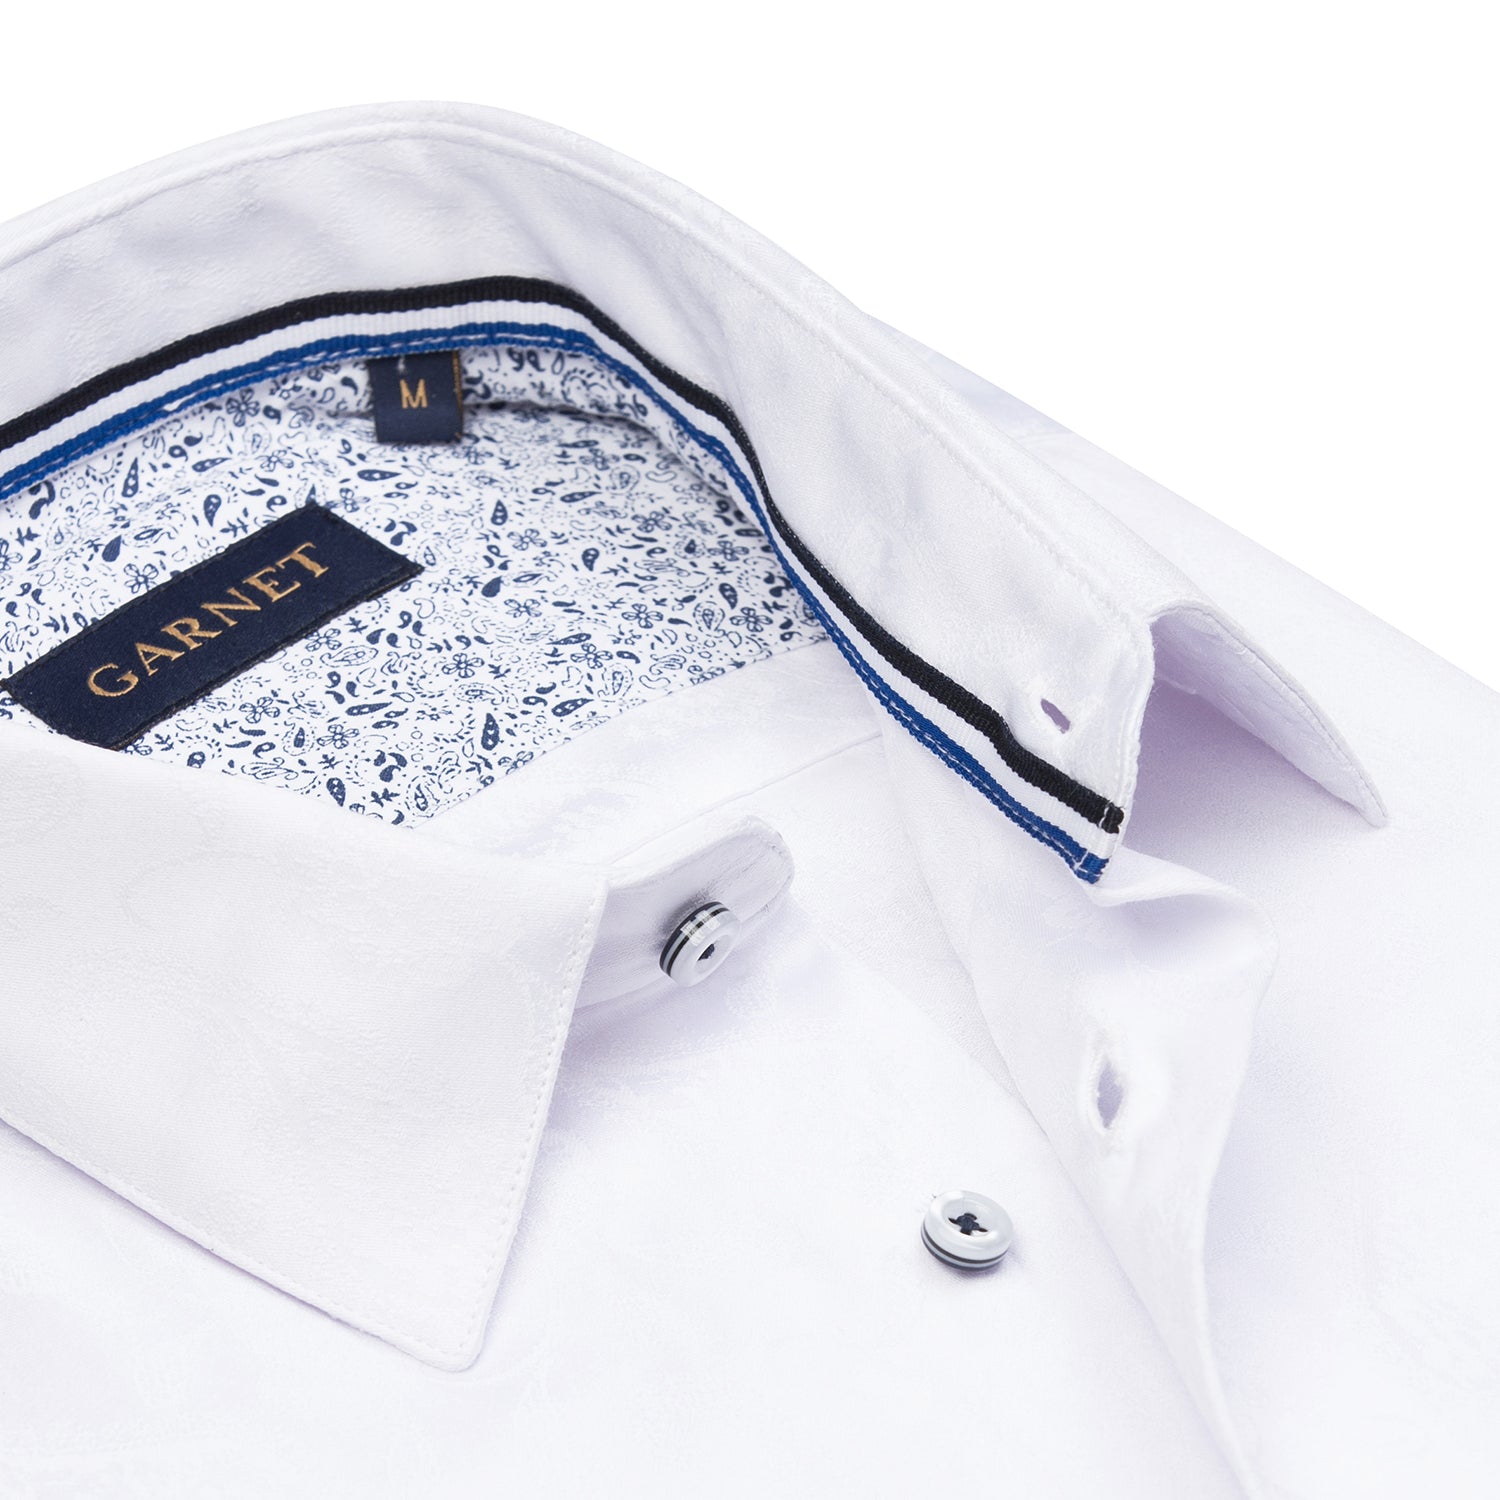 White Paisley Jacquard Long Sleeve Cotton Shirt